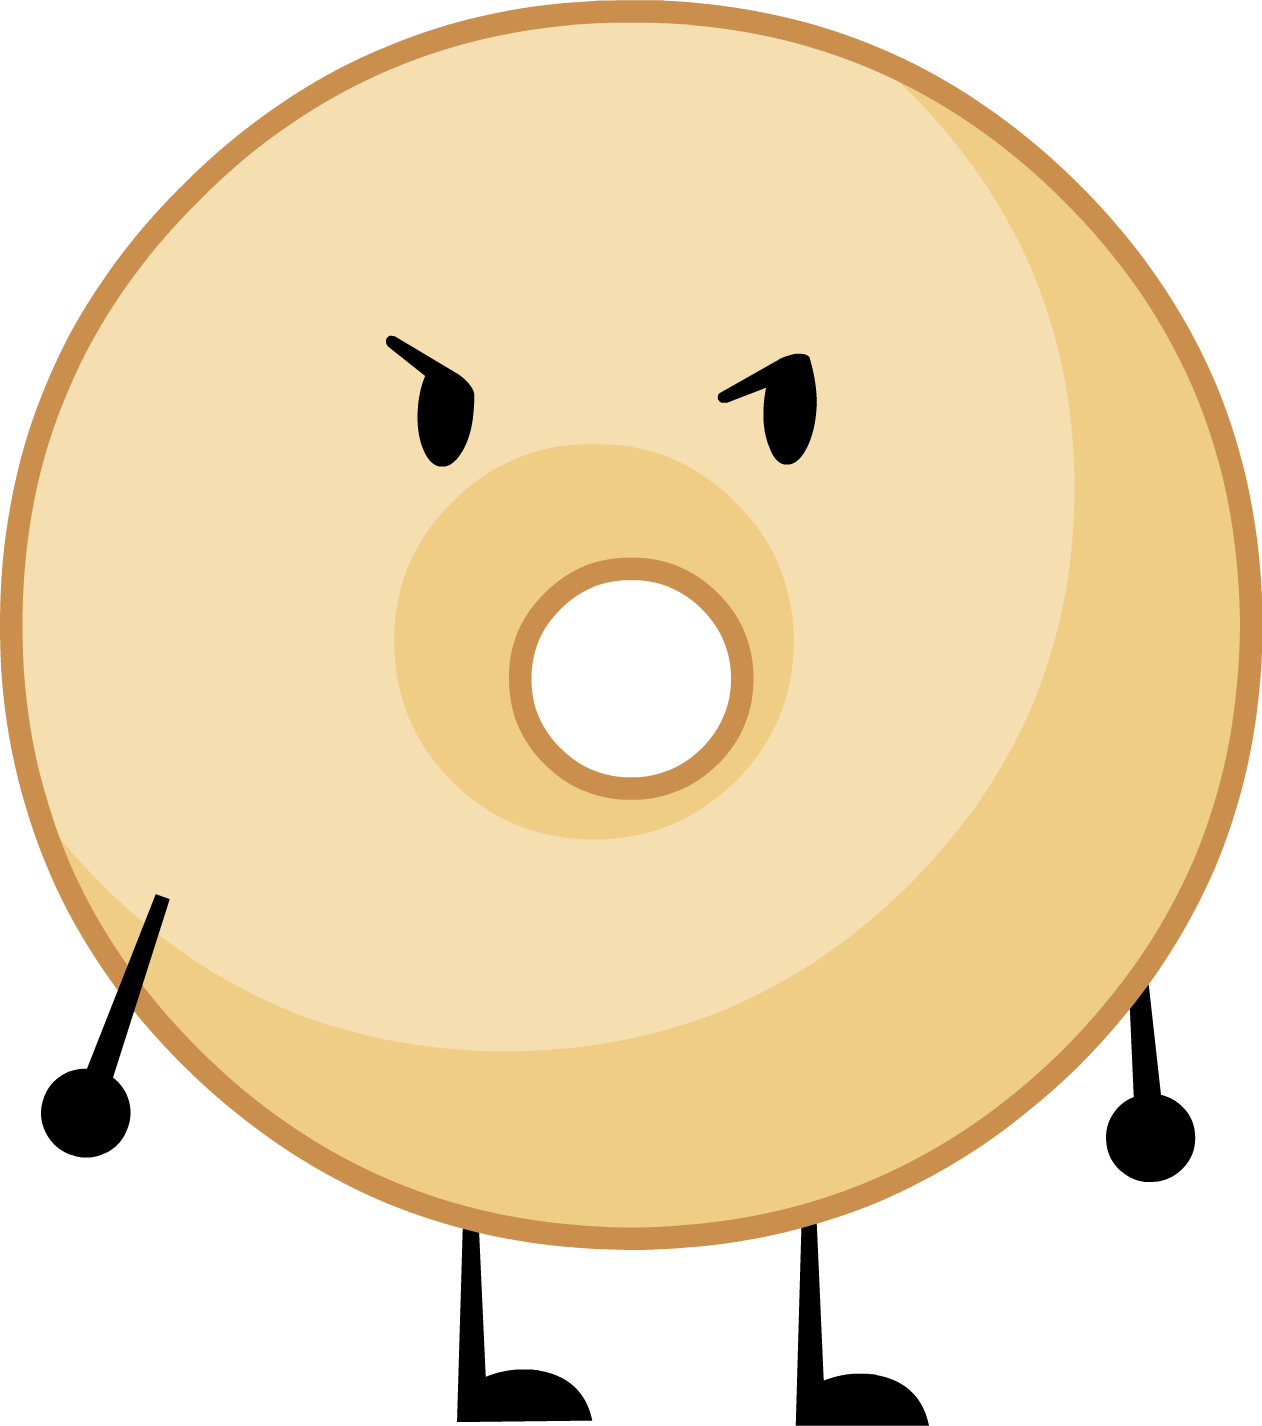 Donut Stand - Doughnut (1262x1426)